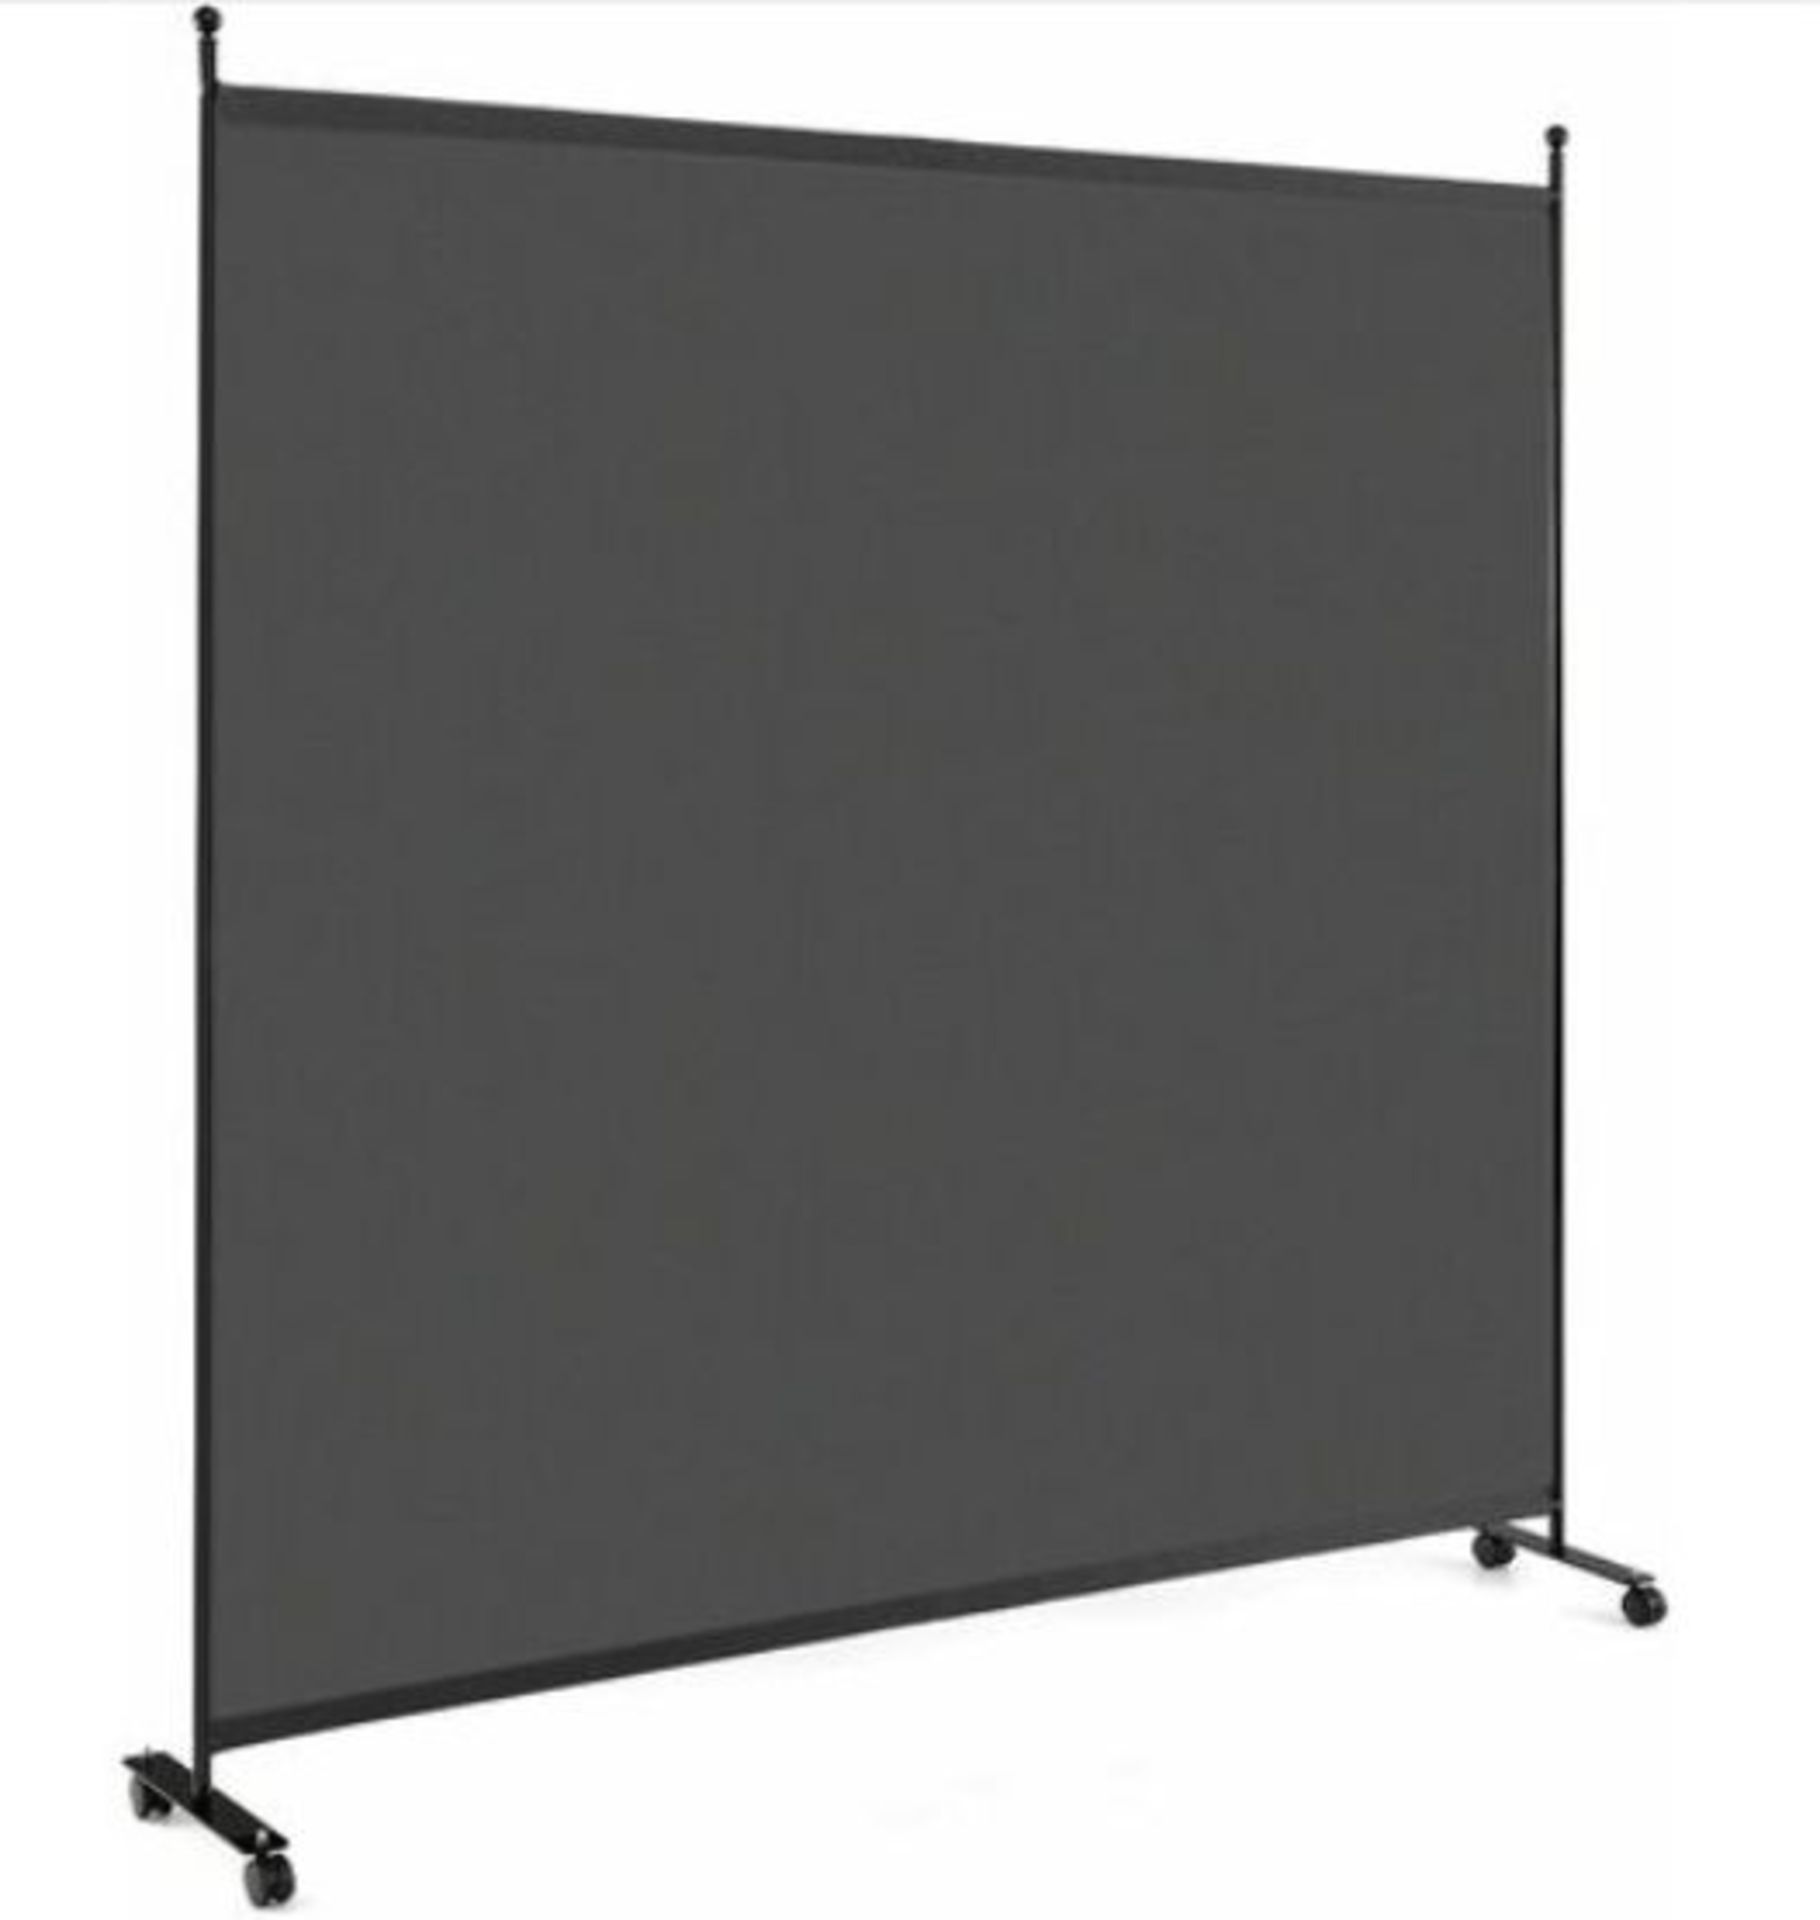 Single Panel Room Divider 184cm Folding Privacy Screen Freestanding W/ 4 Wheels. - ER25.